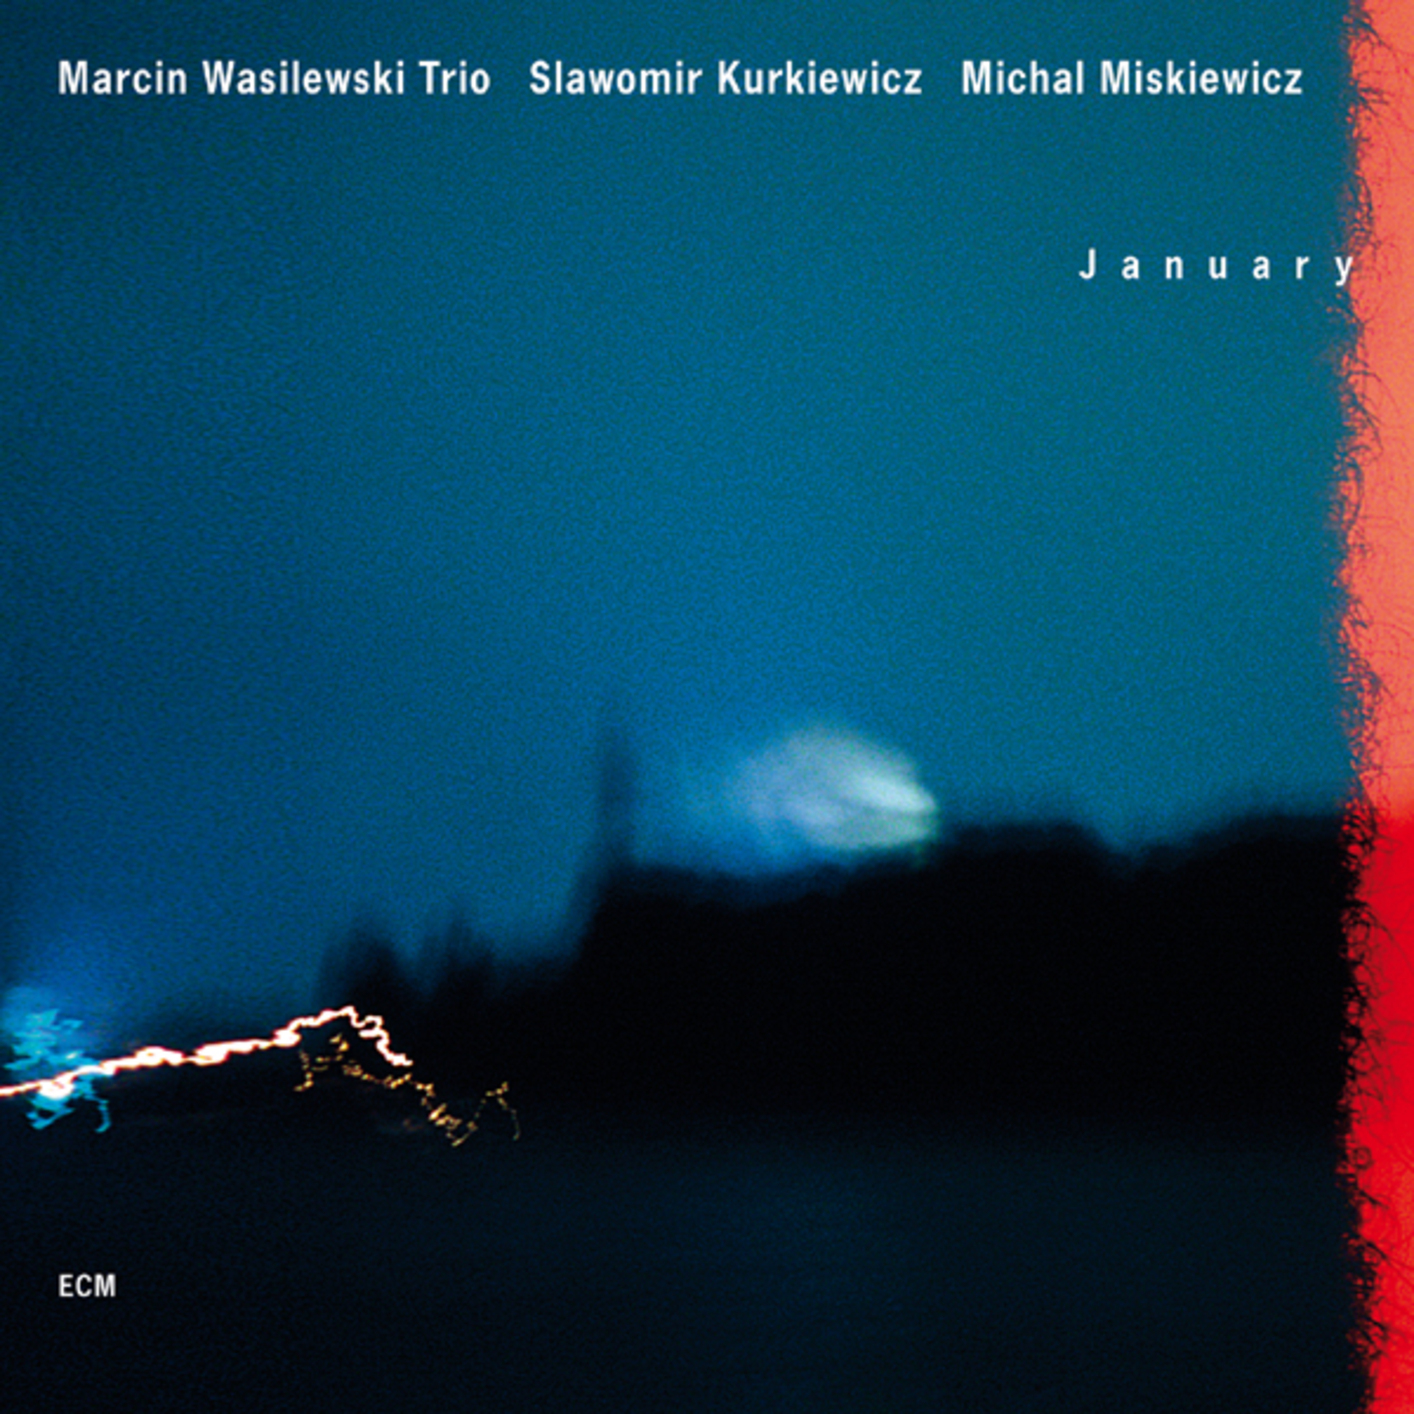 Marcin Wasilewski Trio „January” 